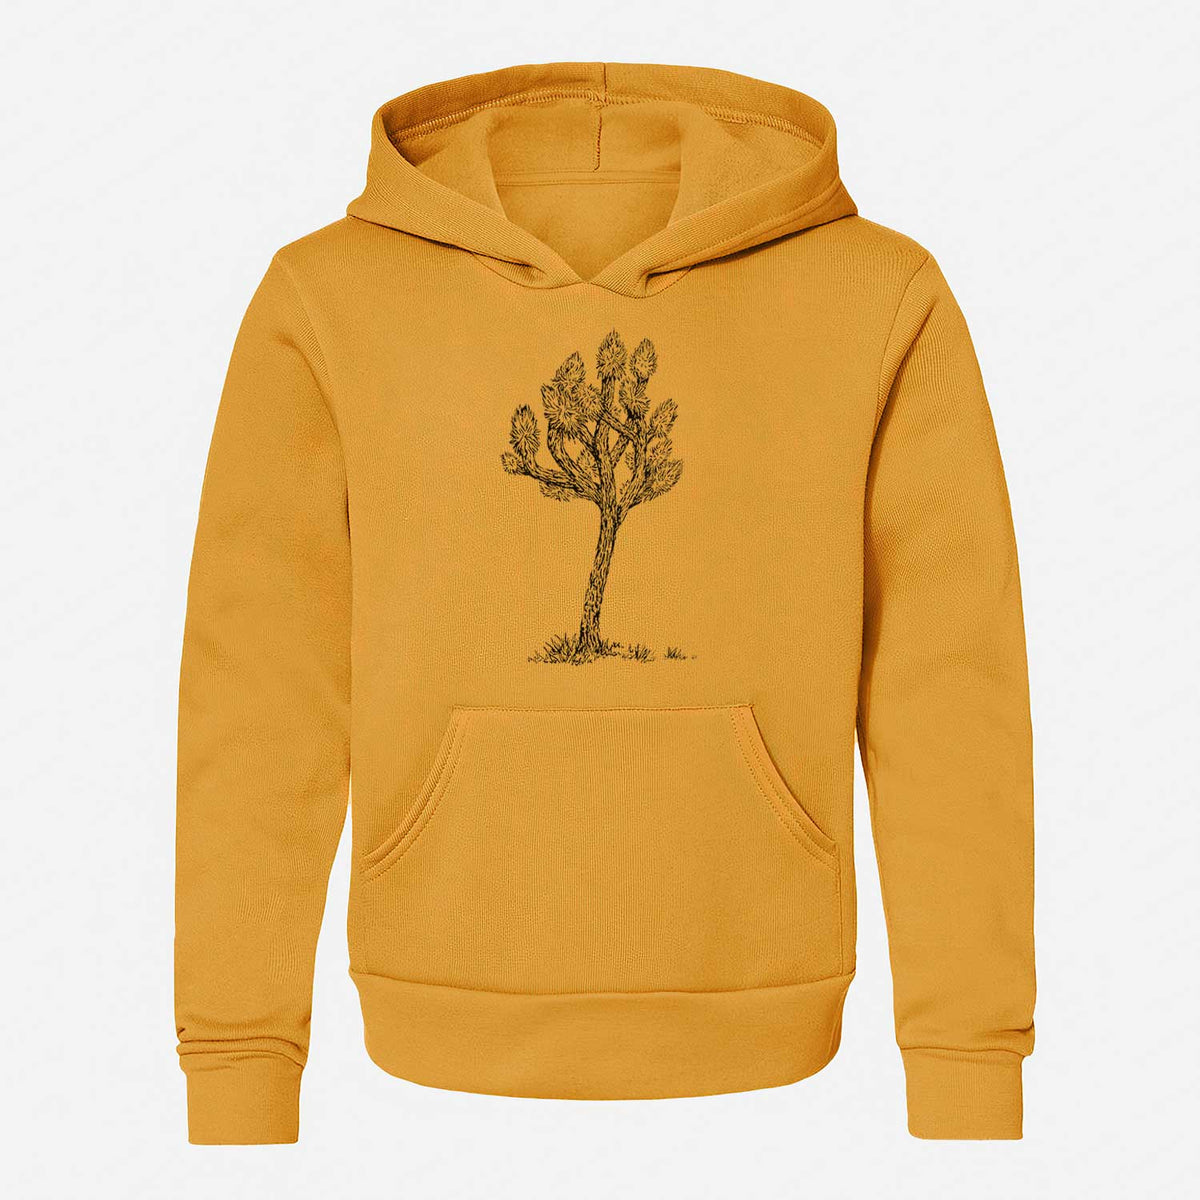 Yucca brevifolia - Joshua Tree - Youth Hoodie Sweatshirt